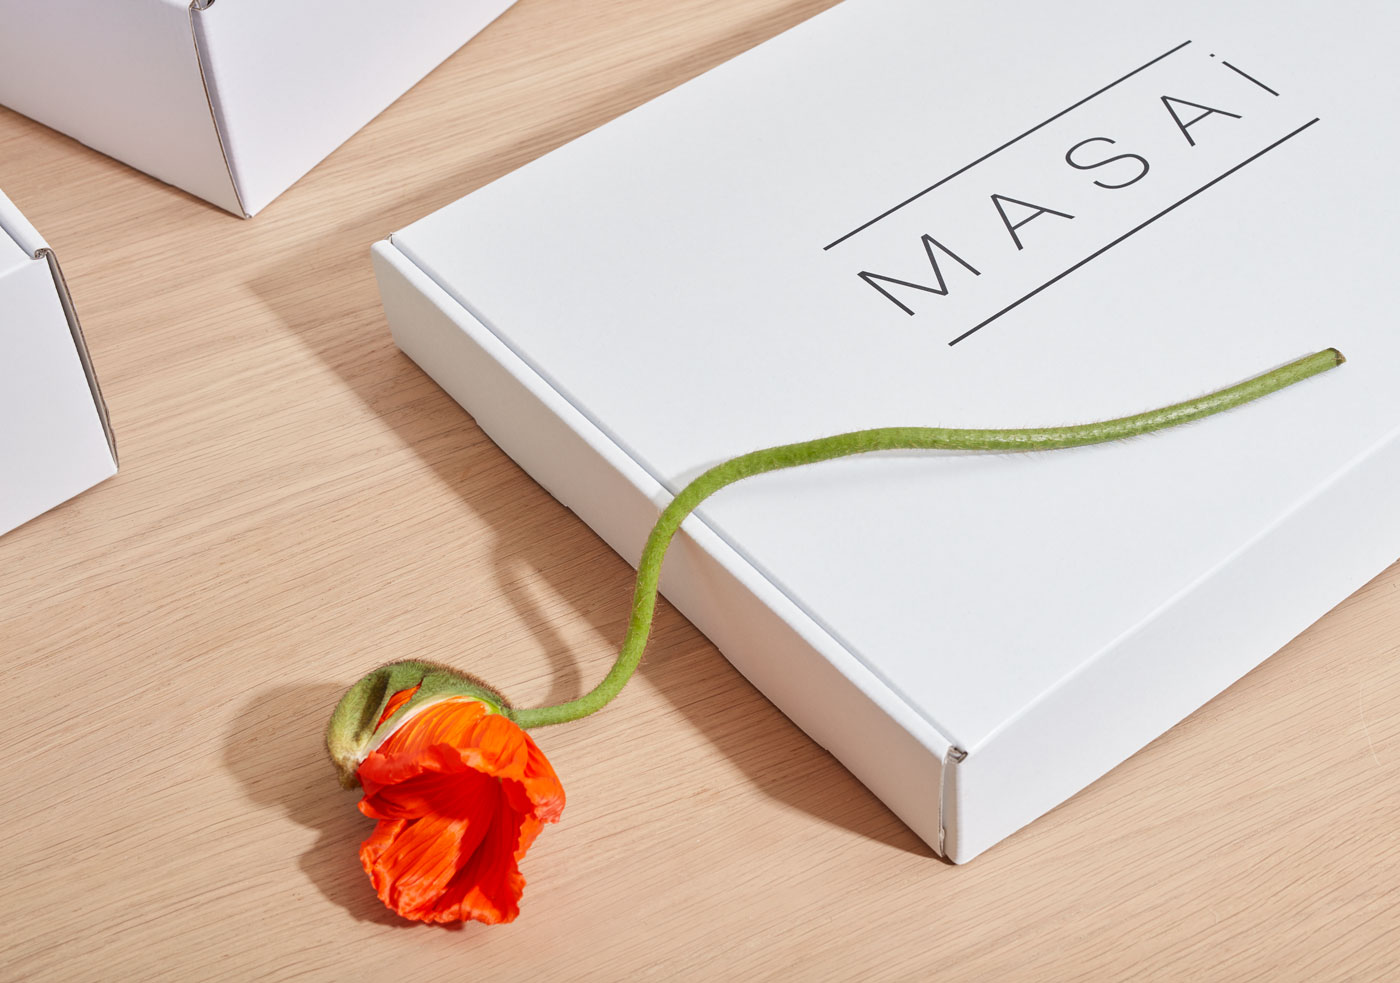 Masai – E-commerce packaging